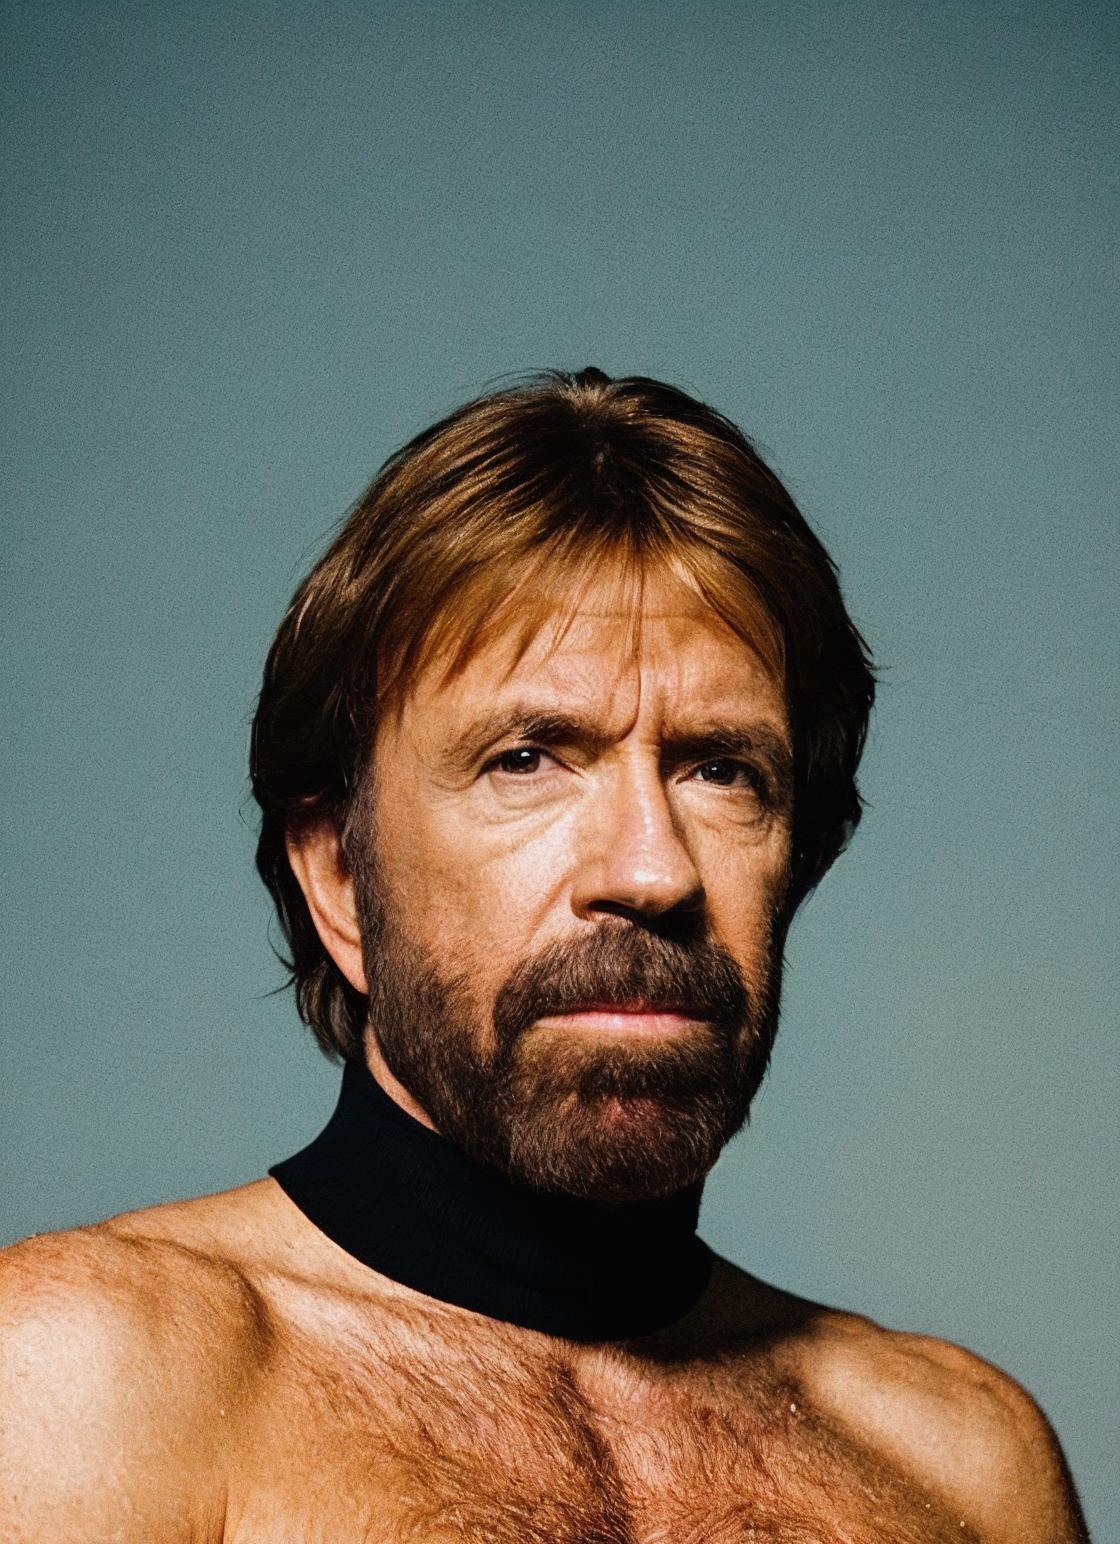 Chuck Norris image by malcolmrey